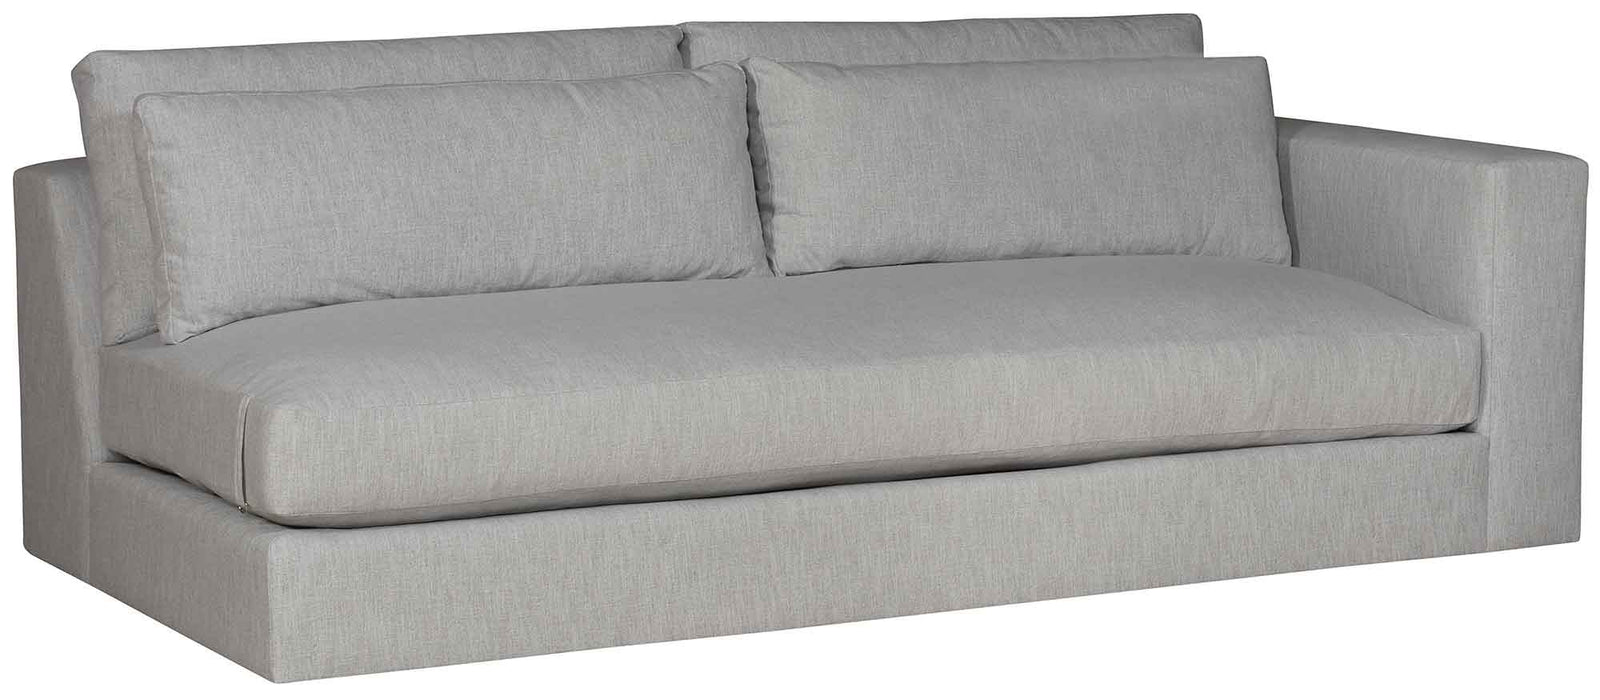 Vanguard Ease Leone Arm Bench Seat Sofa